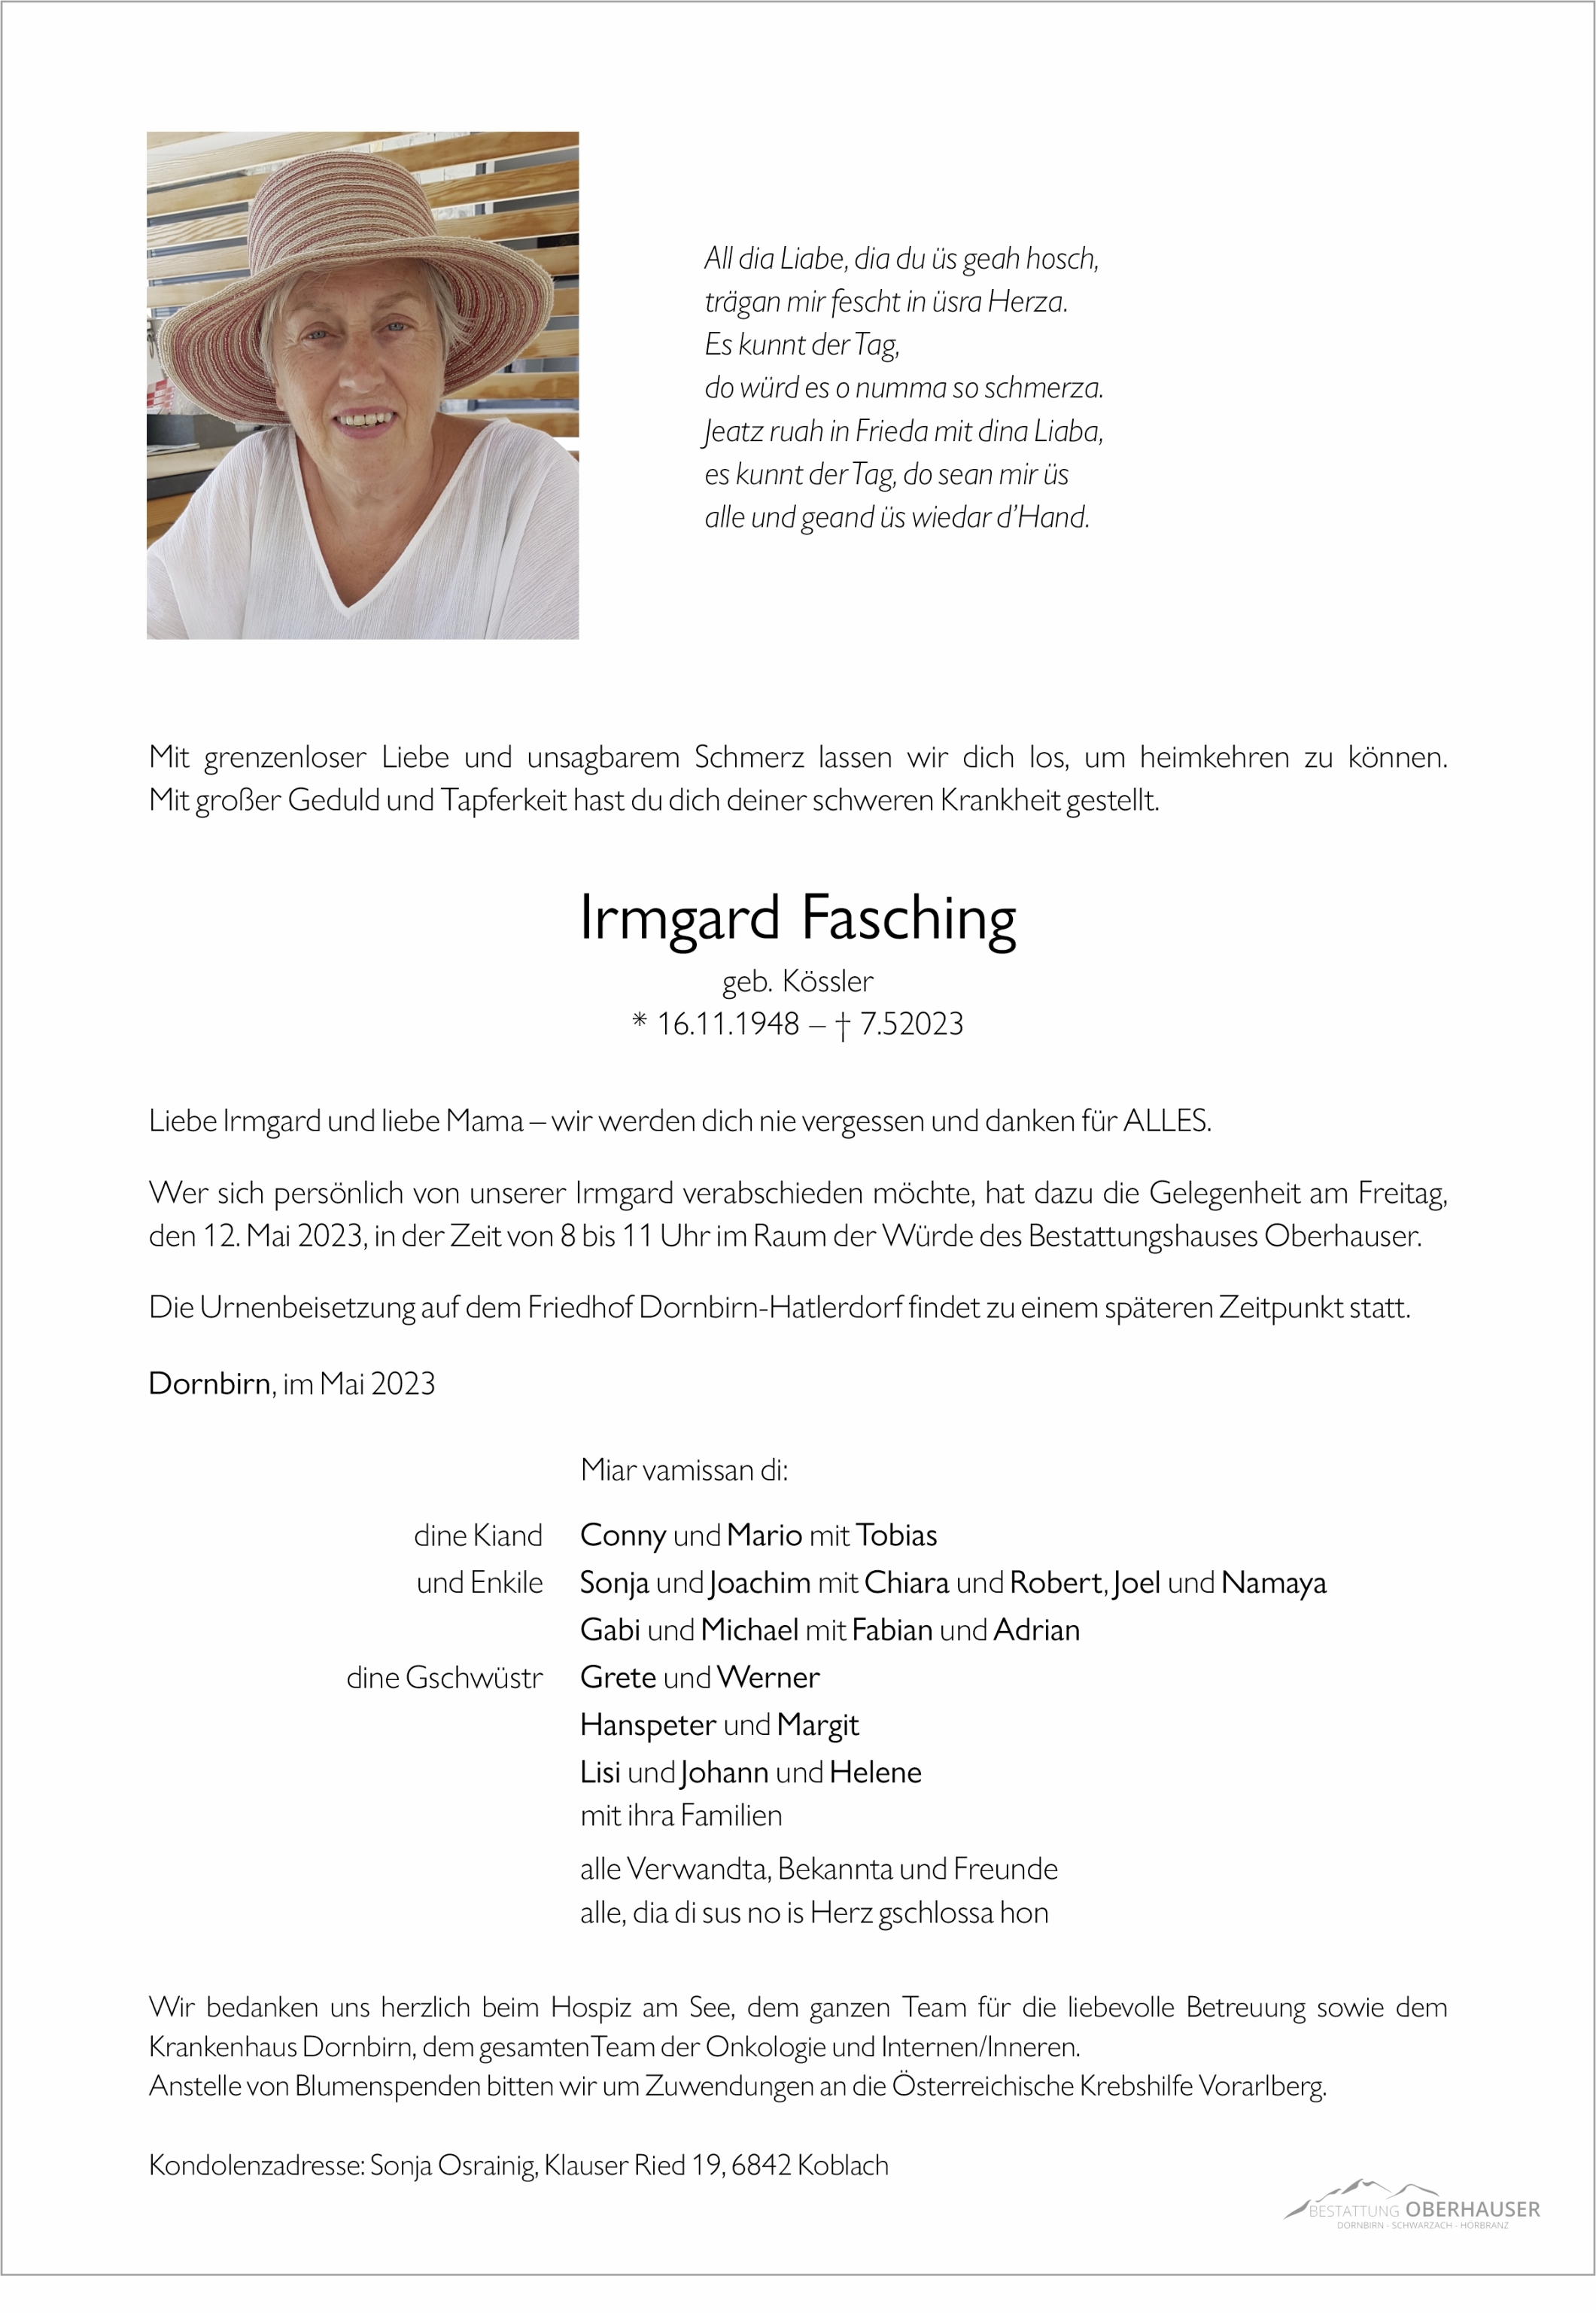 Irmgard Fasching